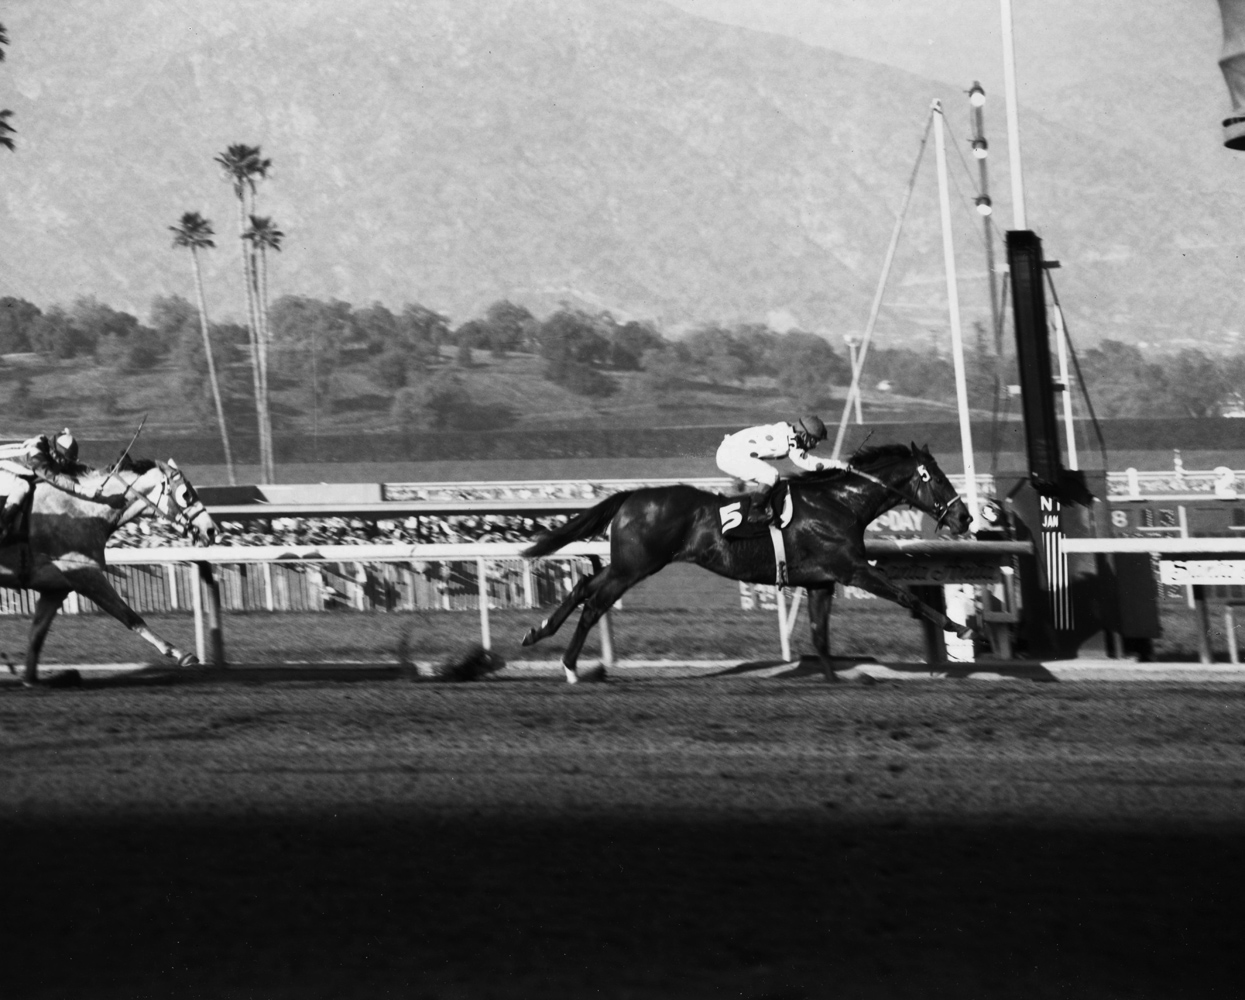 Damascus (Bill Shoemaker up) winning the 1968 San Fernando at Santa Anita Park (Santa Anita Photo/Museum Collection)